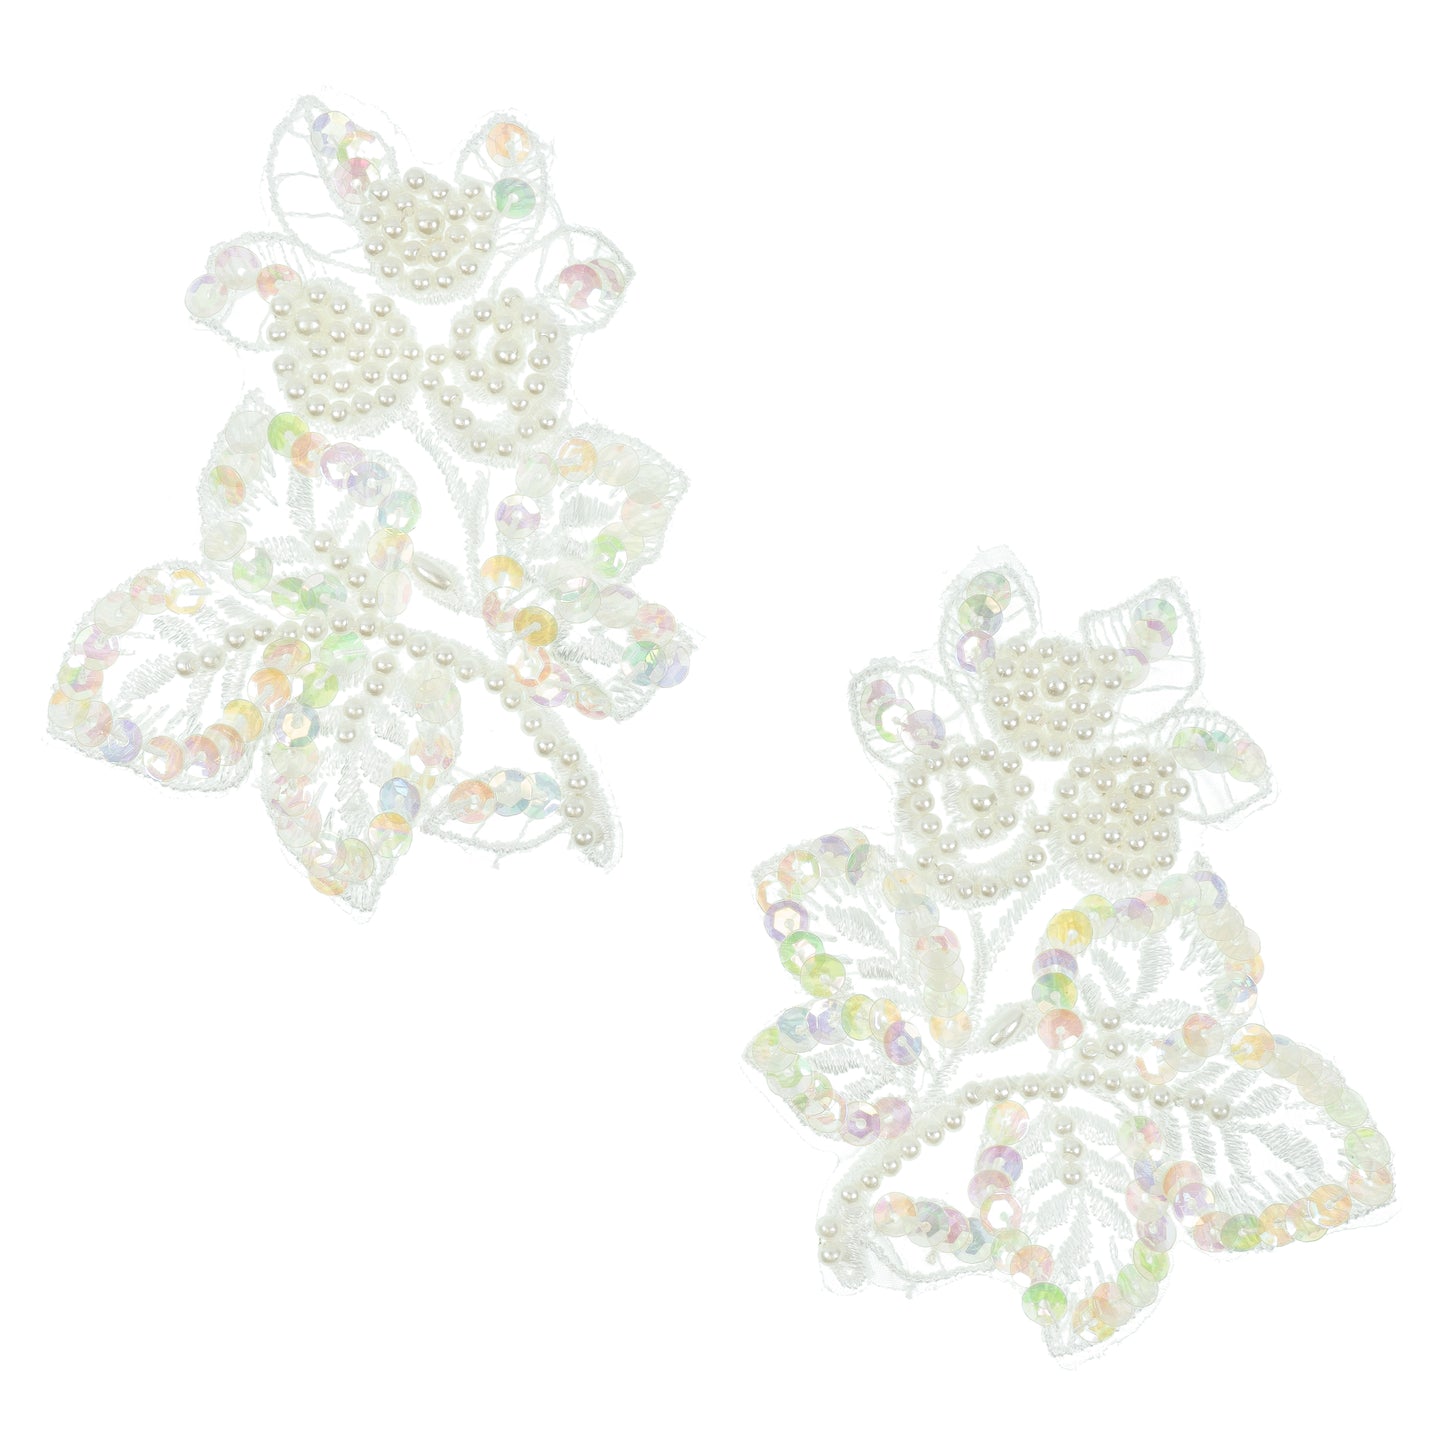 Vintage Bridal Flower Bud Lace Applique (Pack of 2)  - White